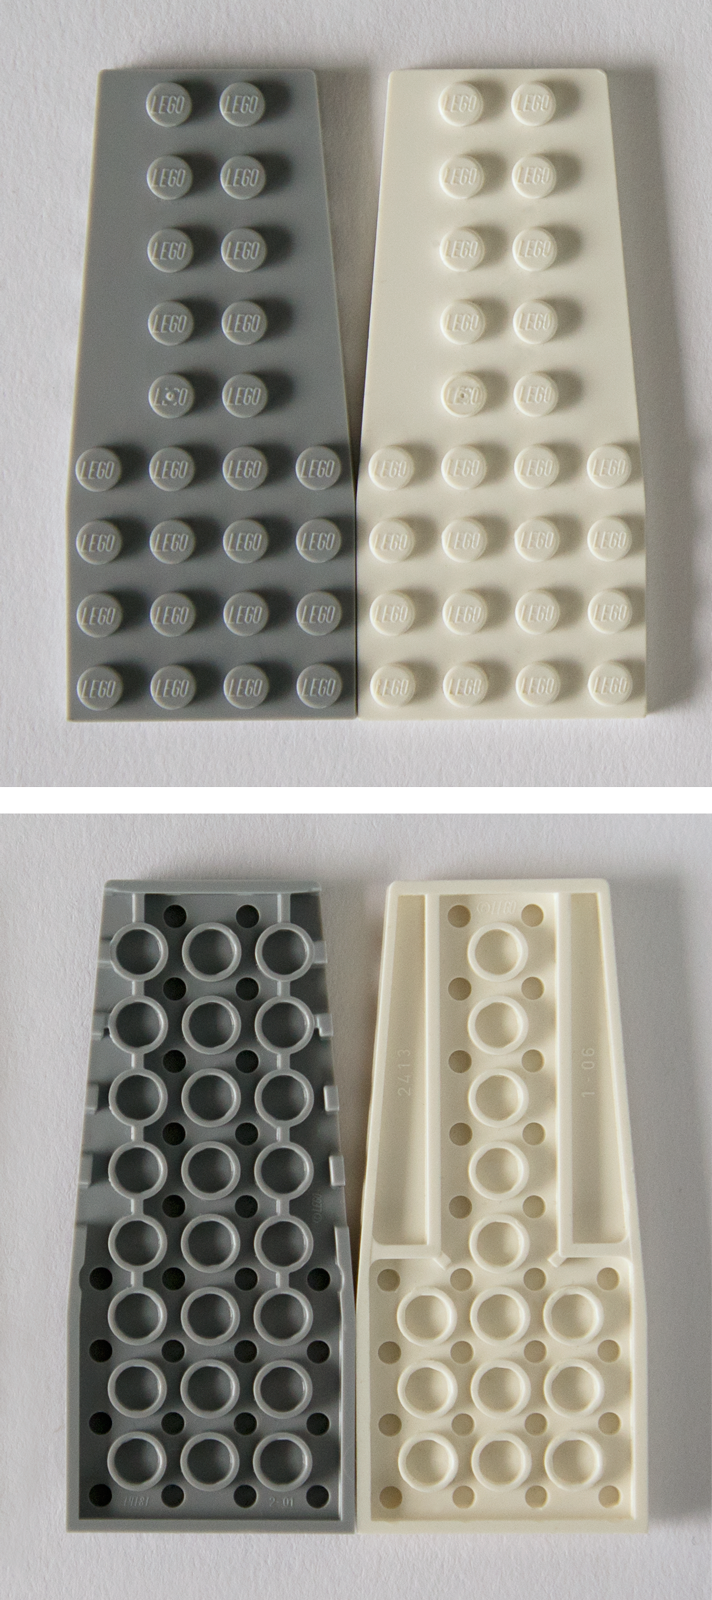 LEGO LOT OF 35 DARK BLUEISH GREY 4 X 4 STUD PLATE PIECES WING CORNER FLAT PARTS